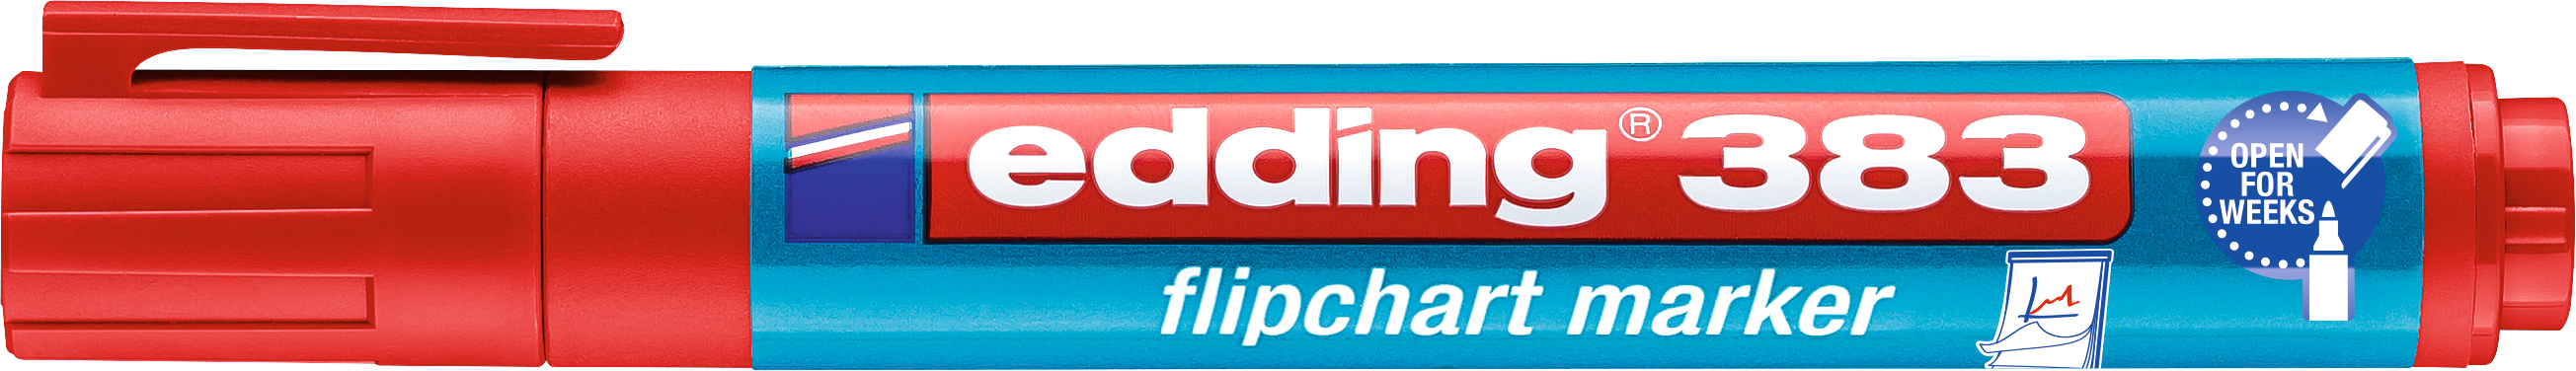 EDDING Flipchart Marker 383 1-5mm 383-3 bleu